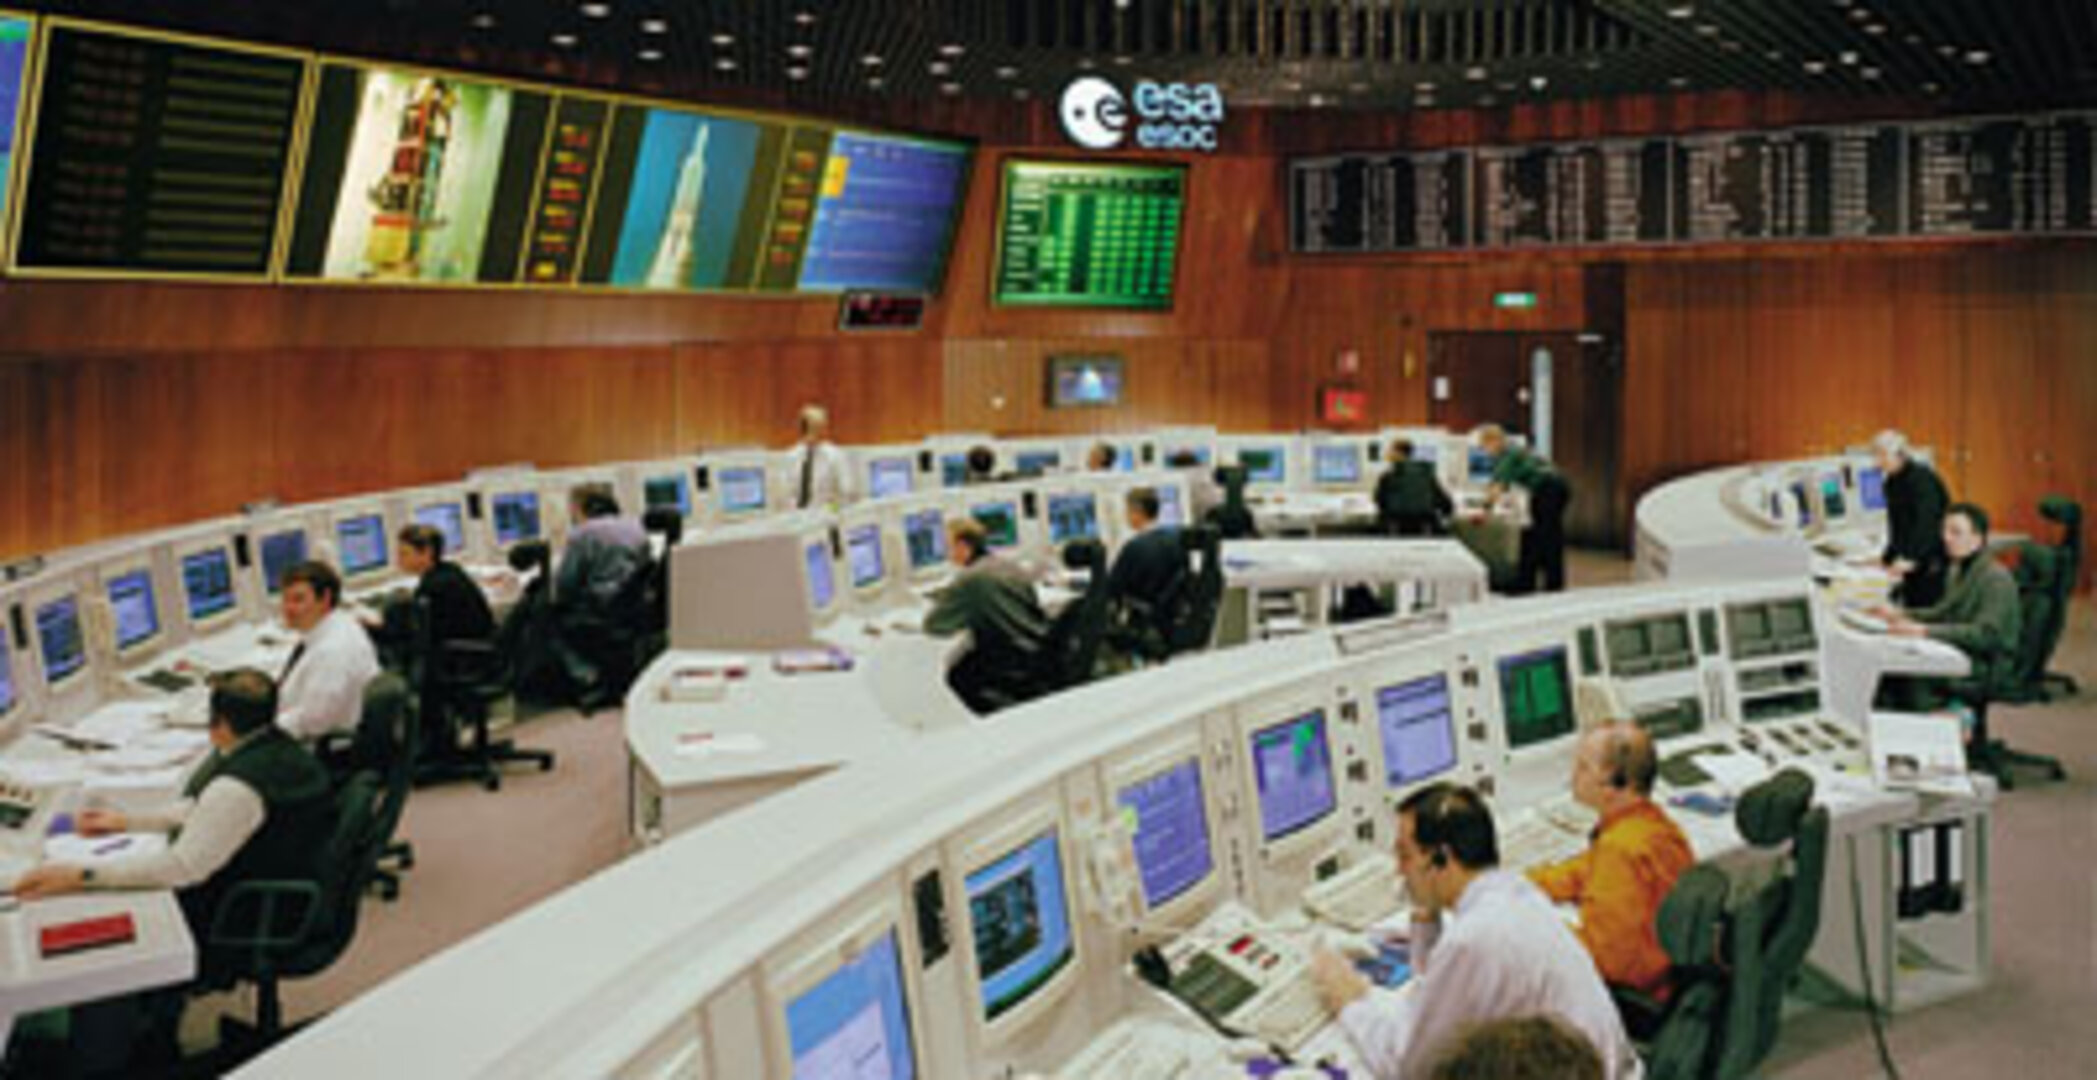 Control Room at ESOC, Darmstadt, Germany